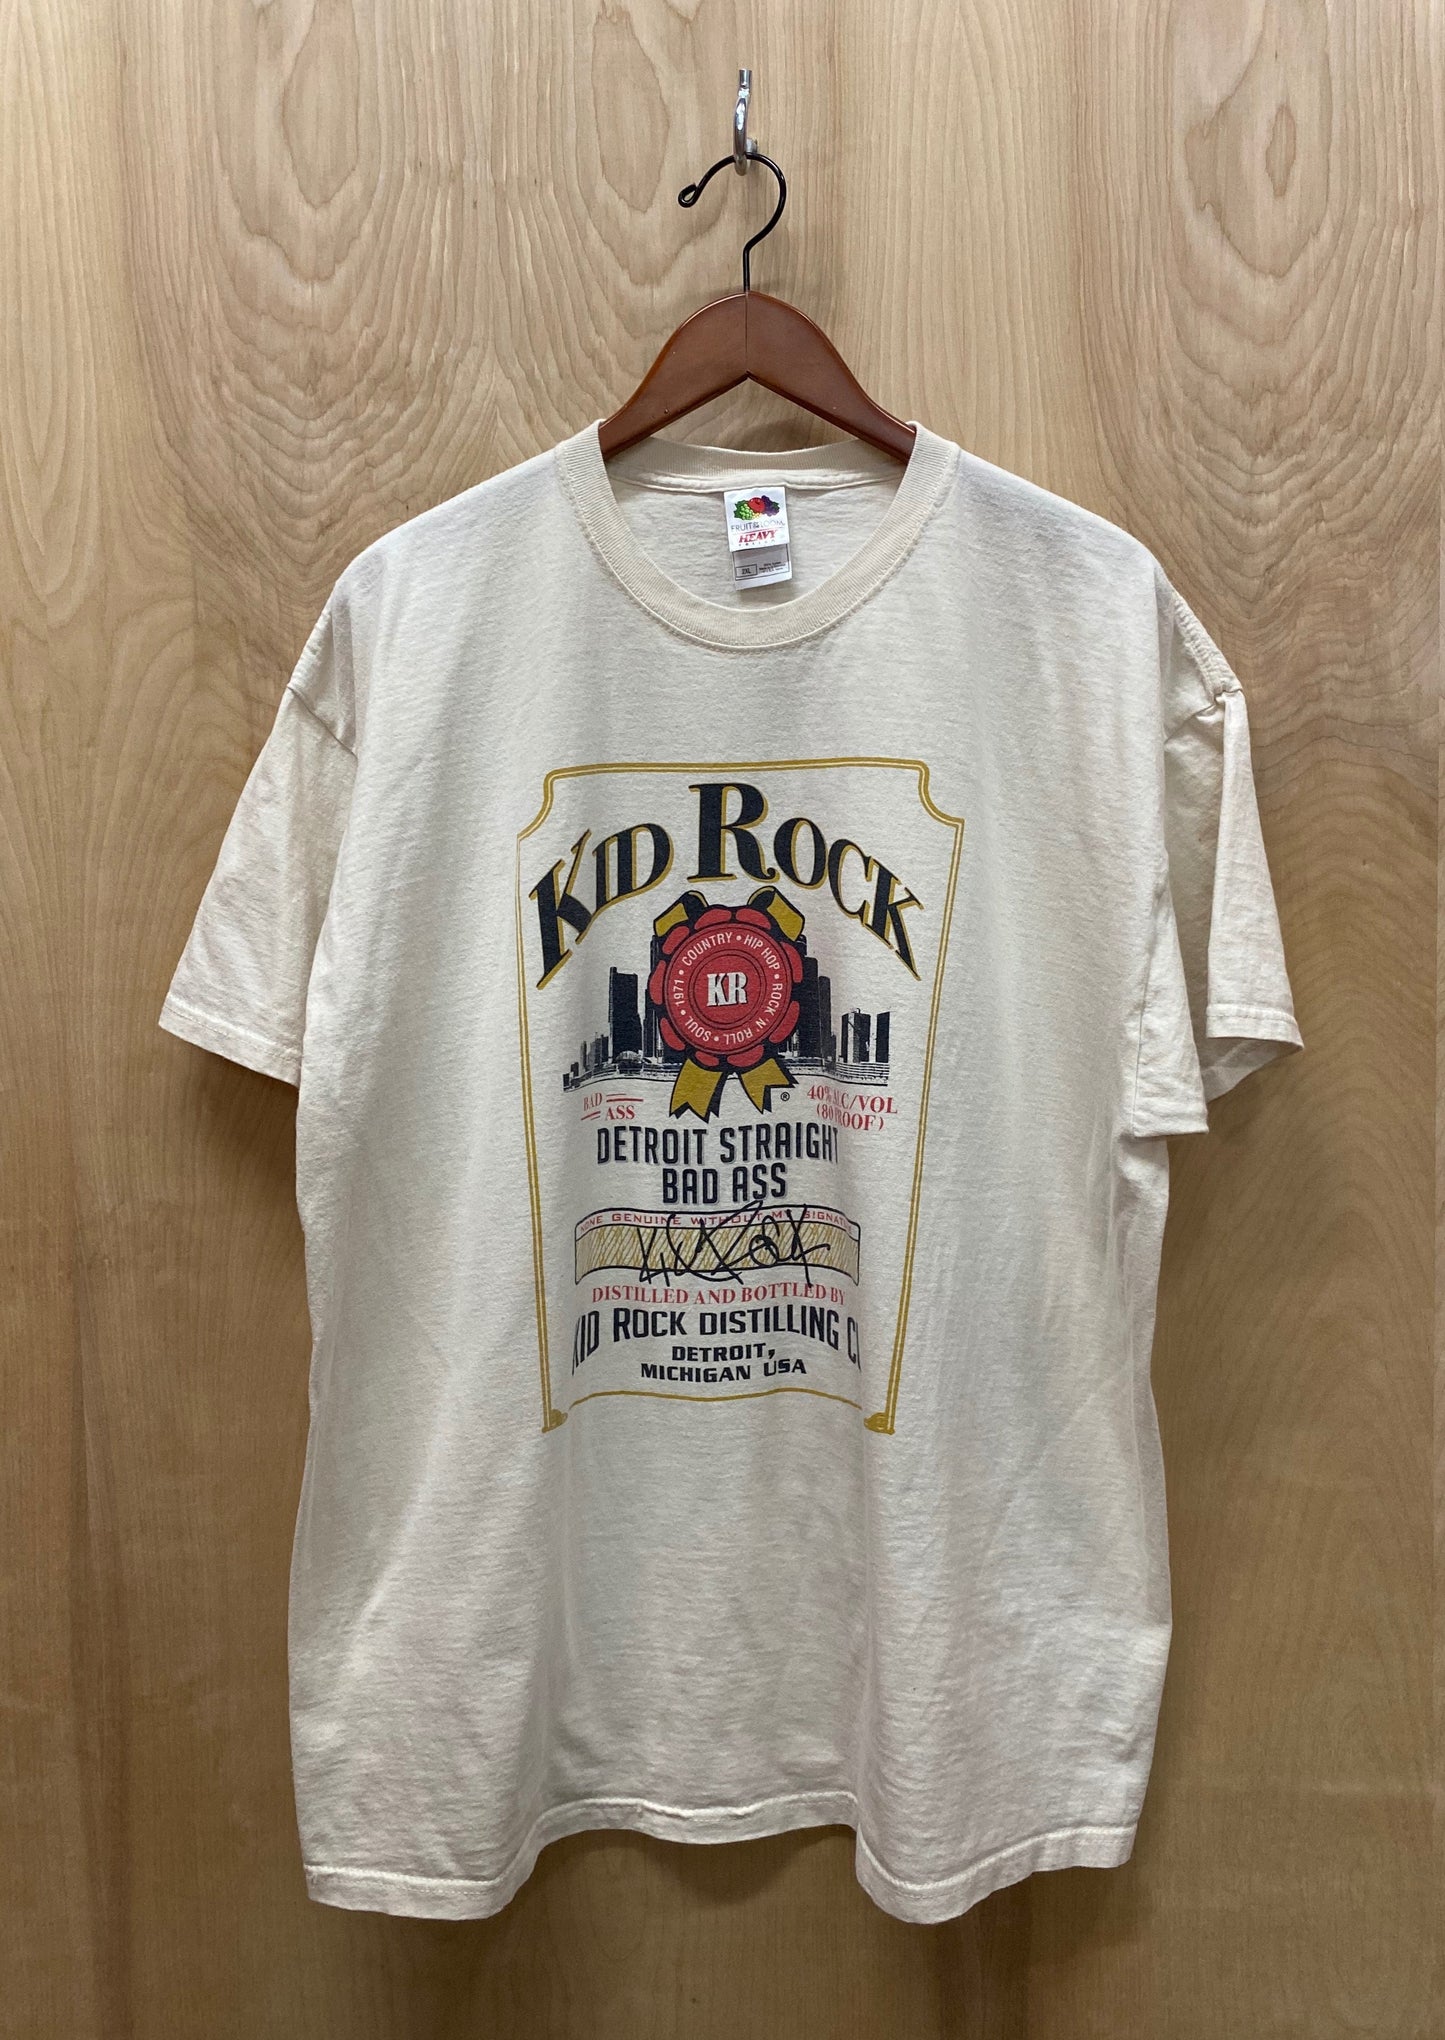 2008 Kid Rock Rock&Roll Rivival Tour T-Shirt (6556821061712)